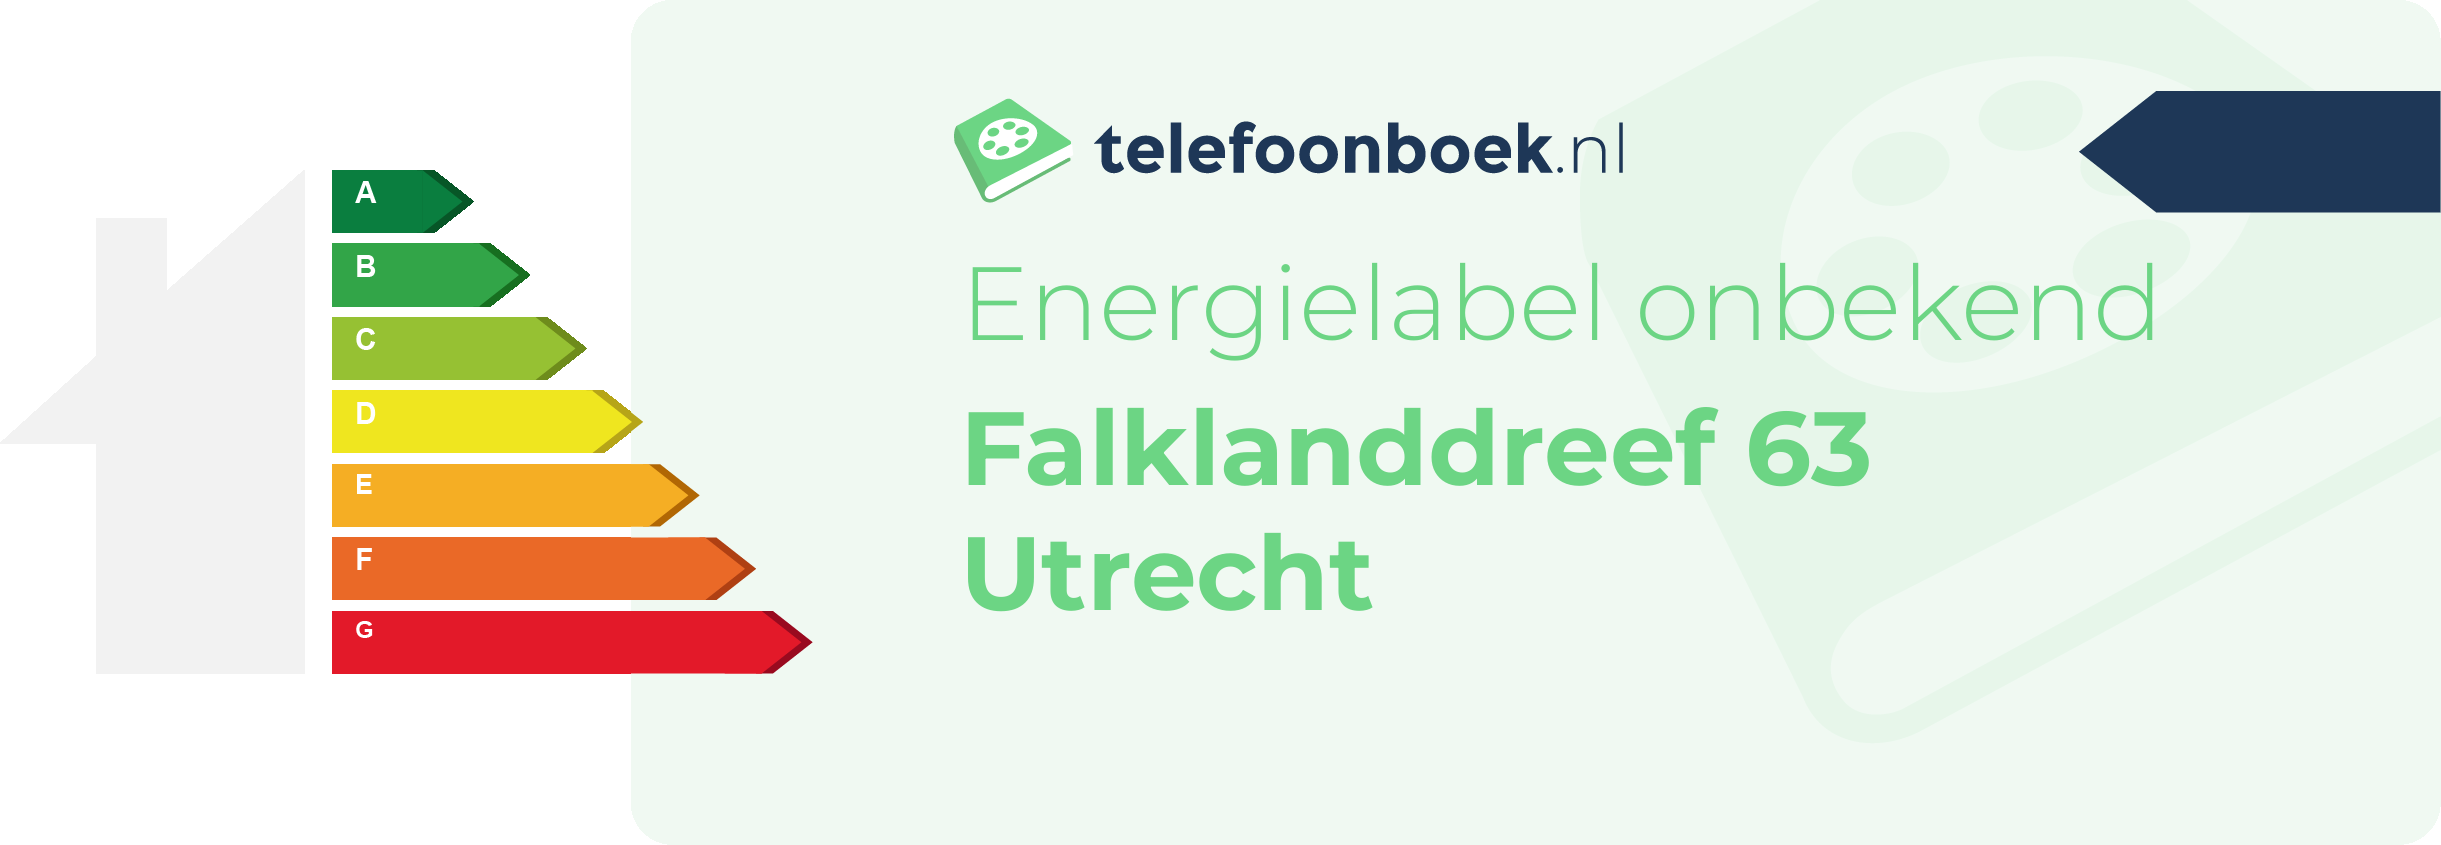 Energielabel Falklanddreef 63 Utrecht